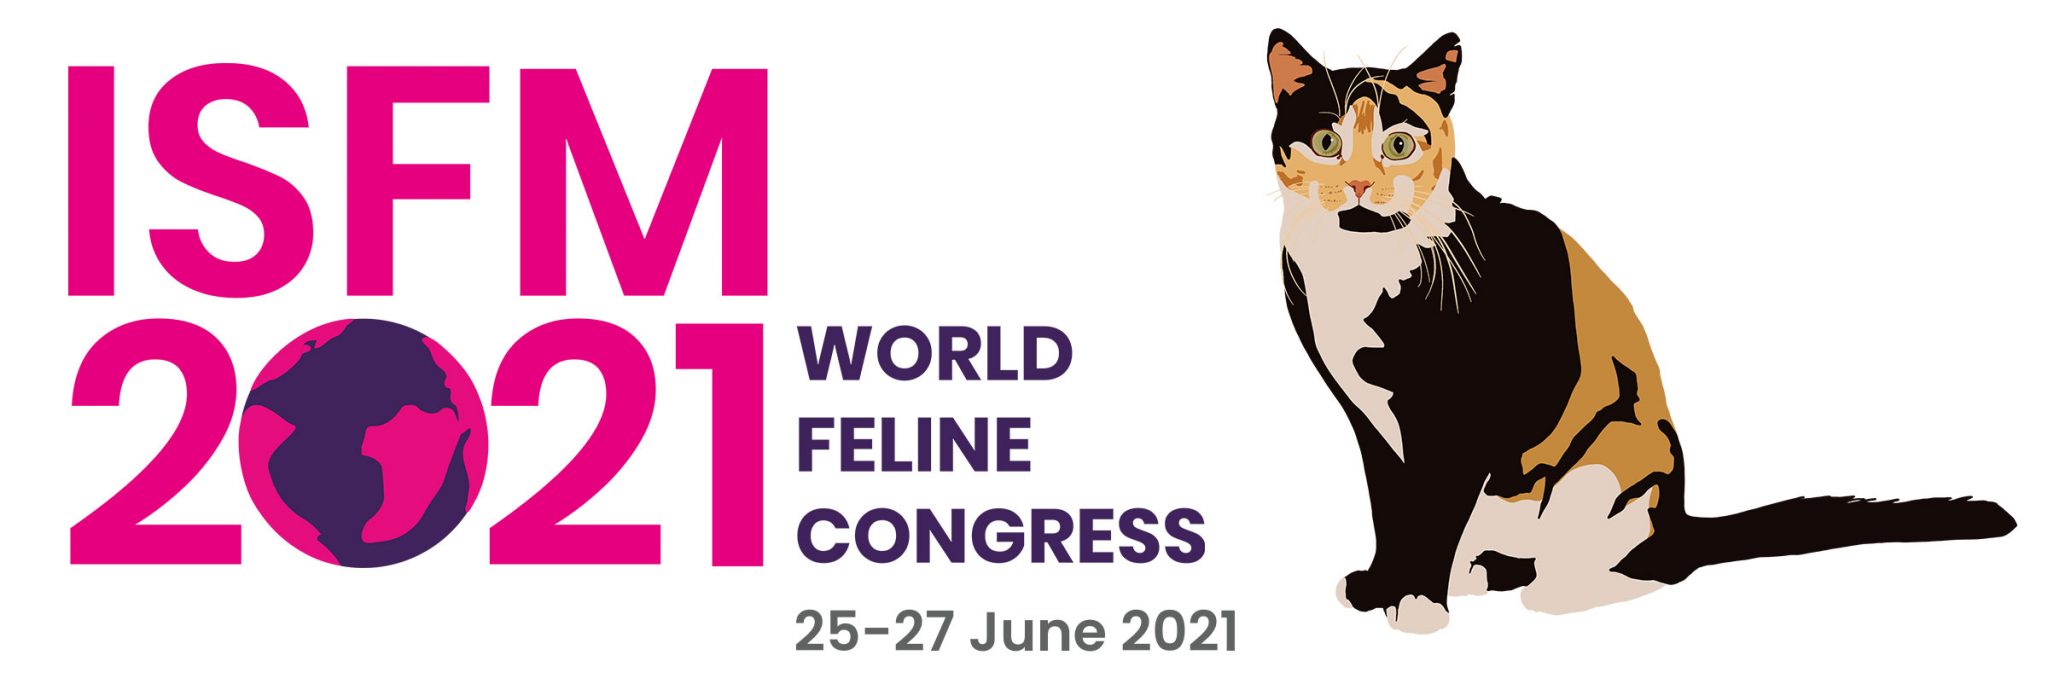 ISFM World Feline Congress draft International Cat Care